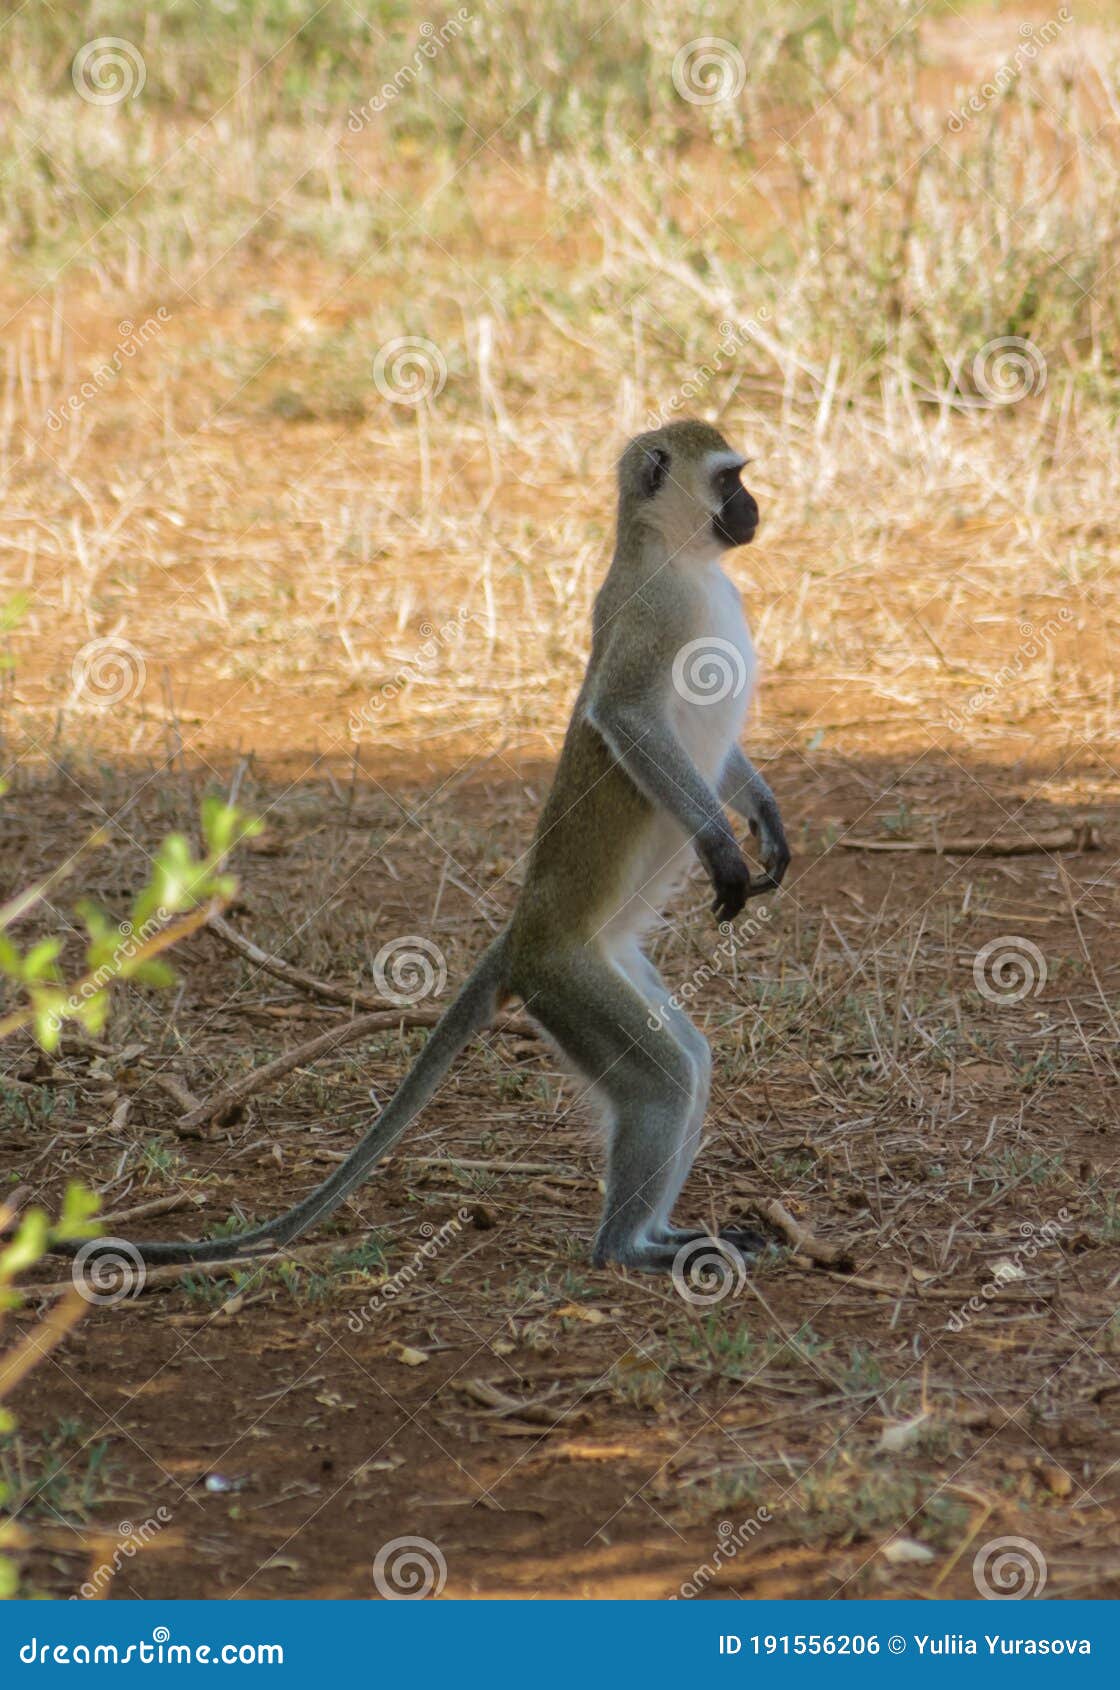 monkey marmoset in africa